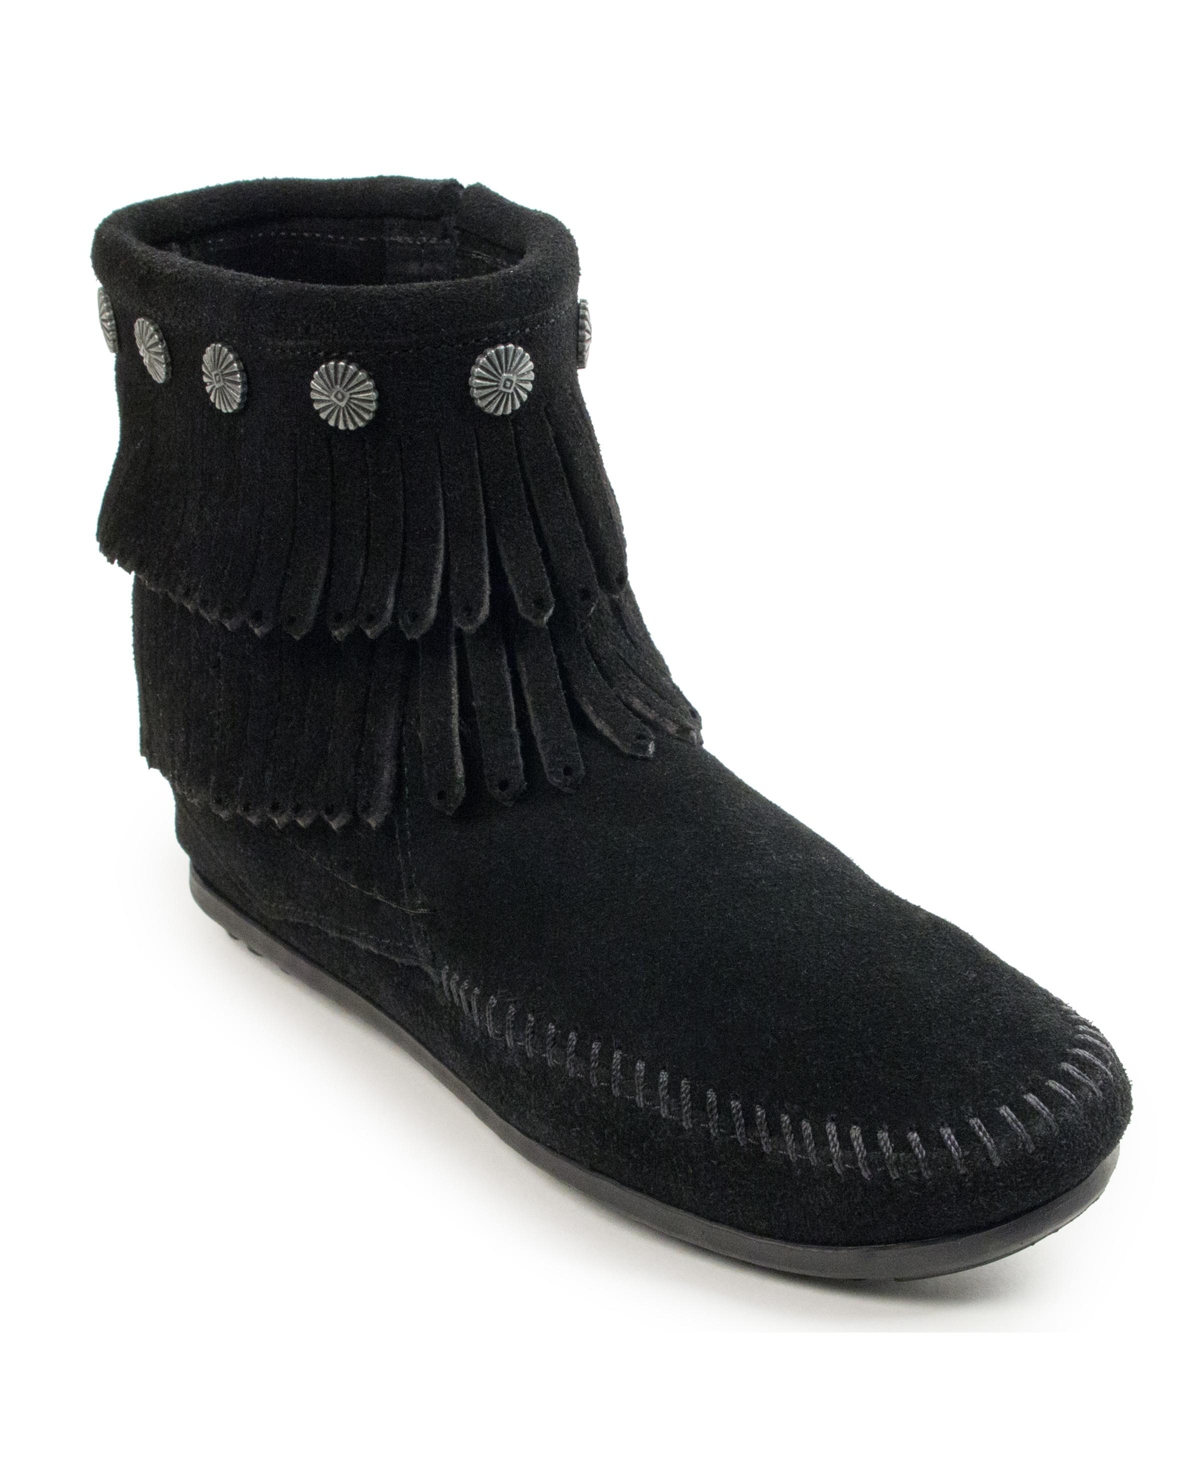 Women's Double Fringe Side Zip Ankle Boots - Black